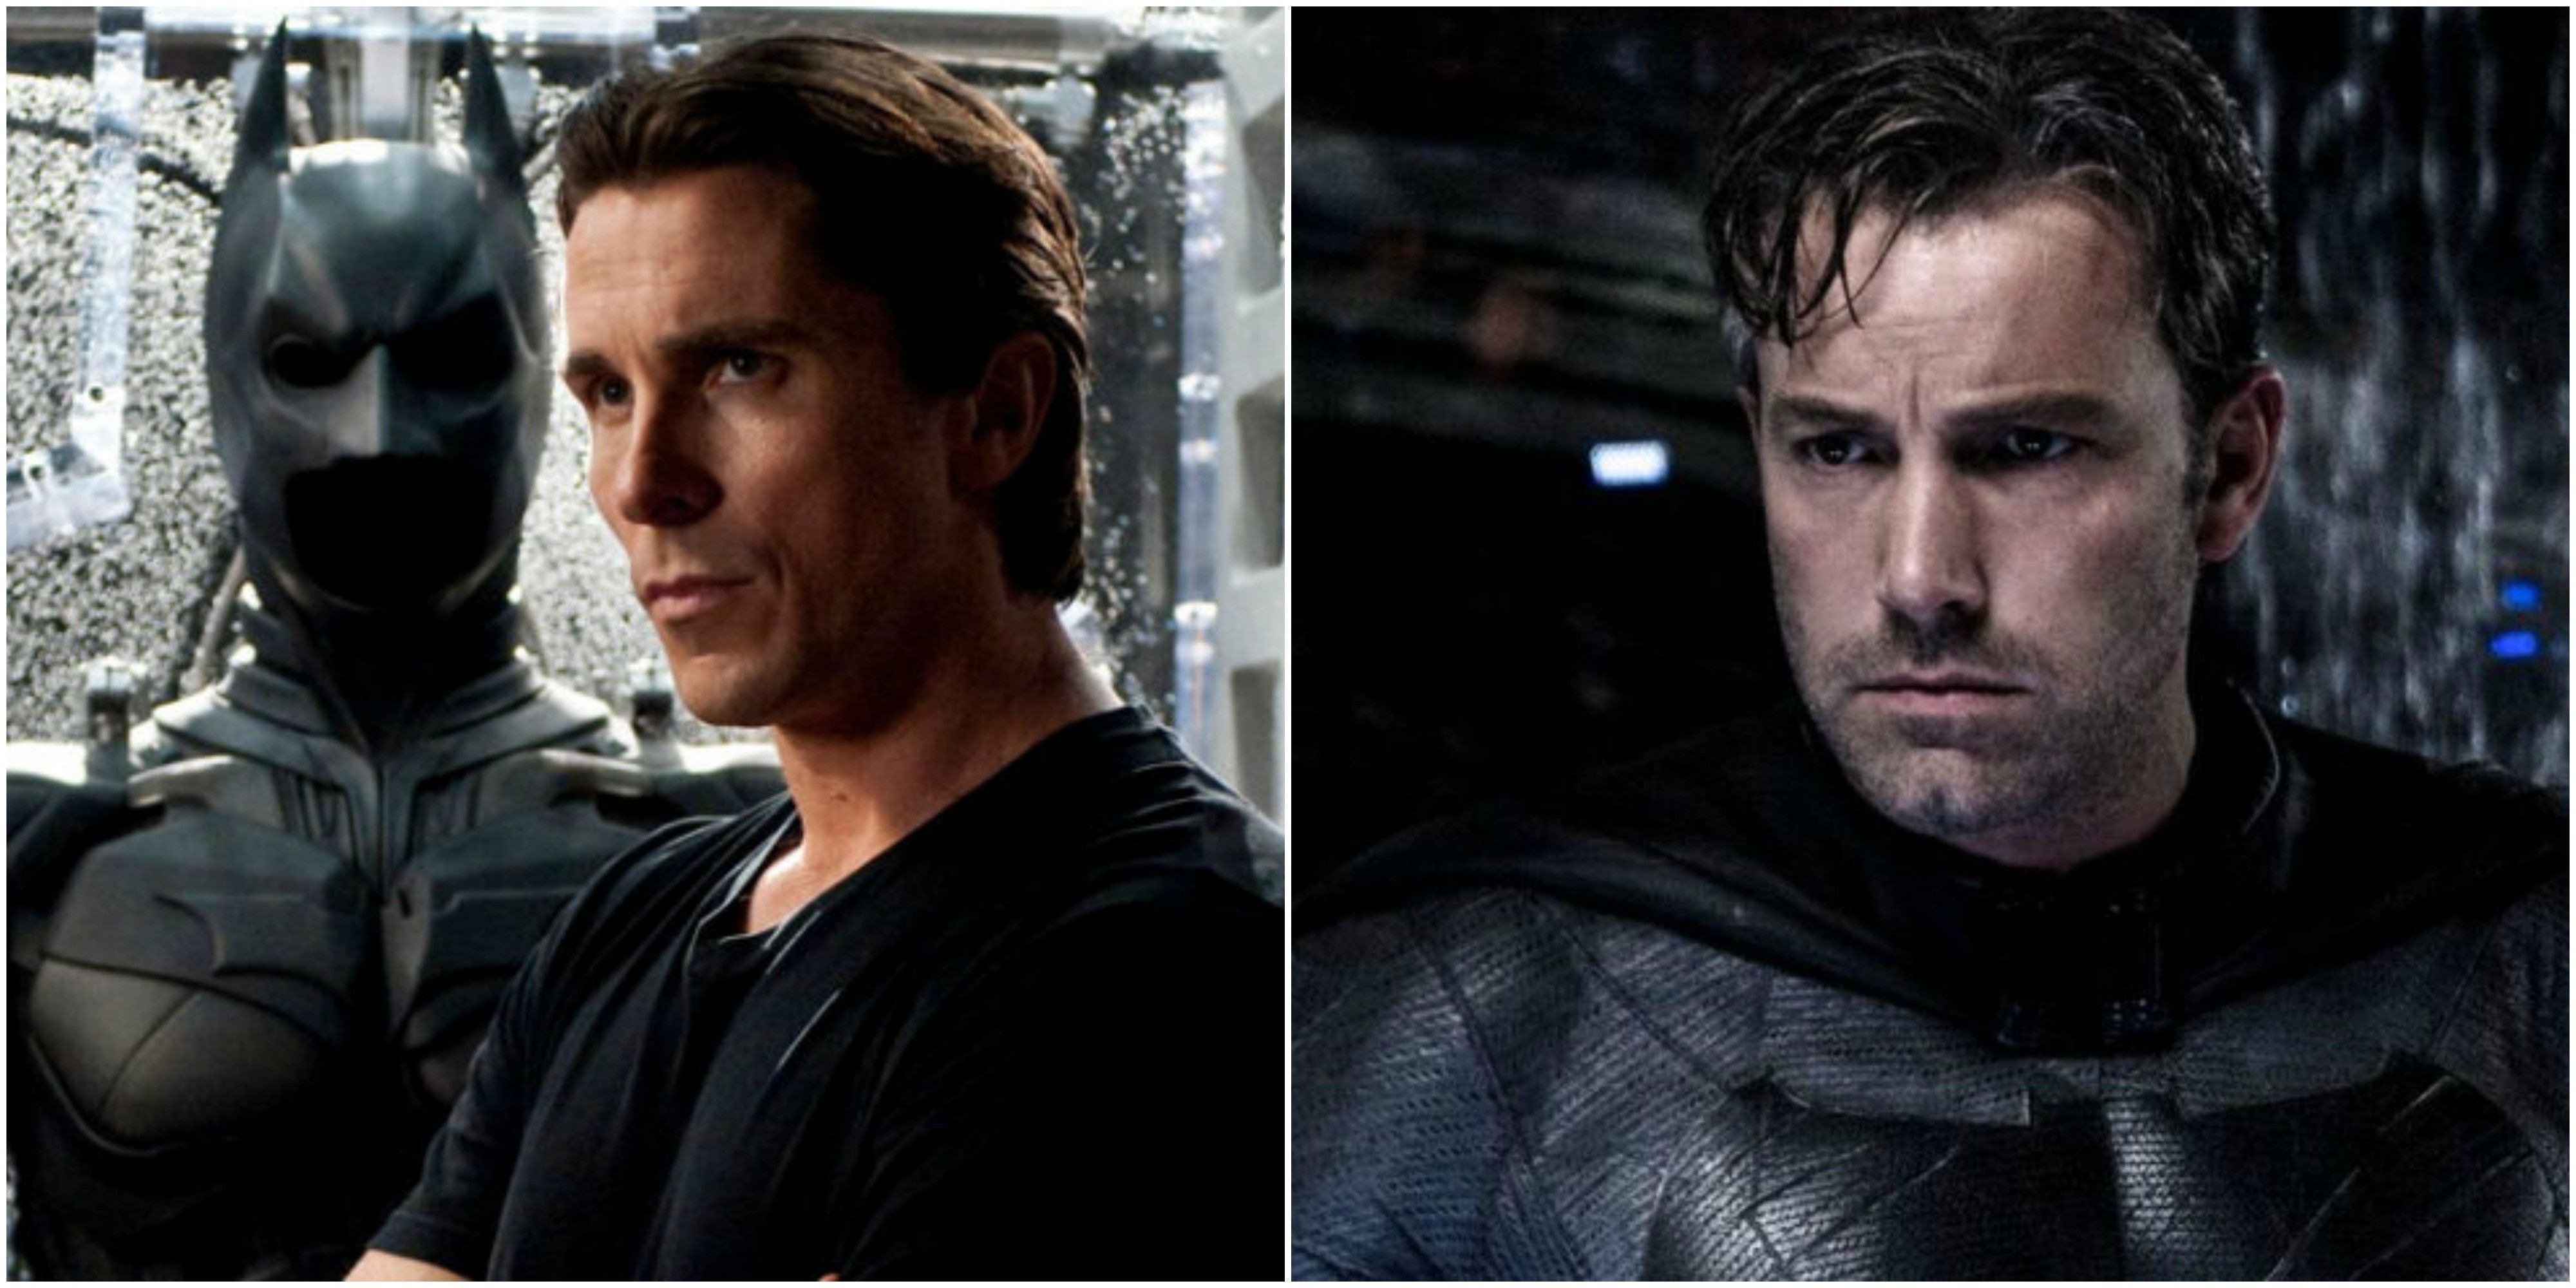 2. Christian Bale (Batman/Bruce Wayne) .